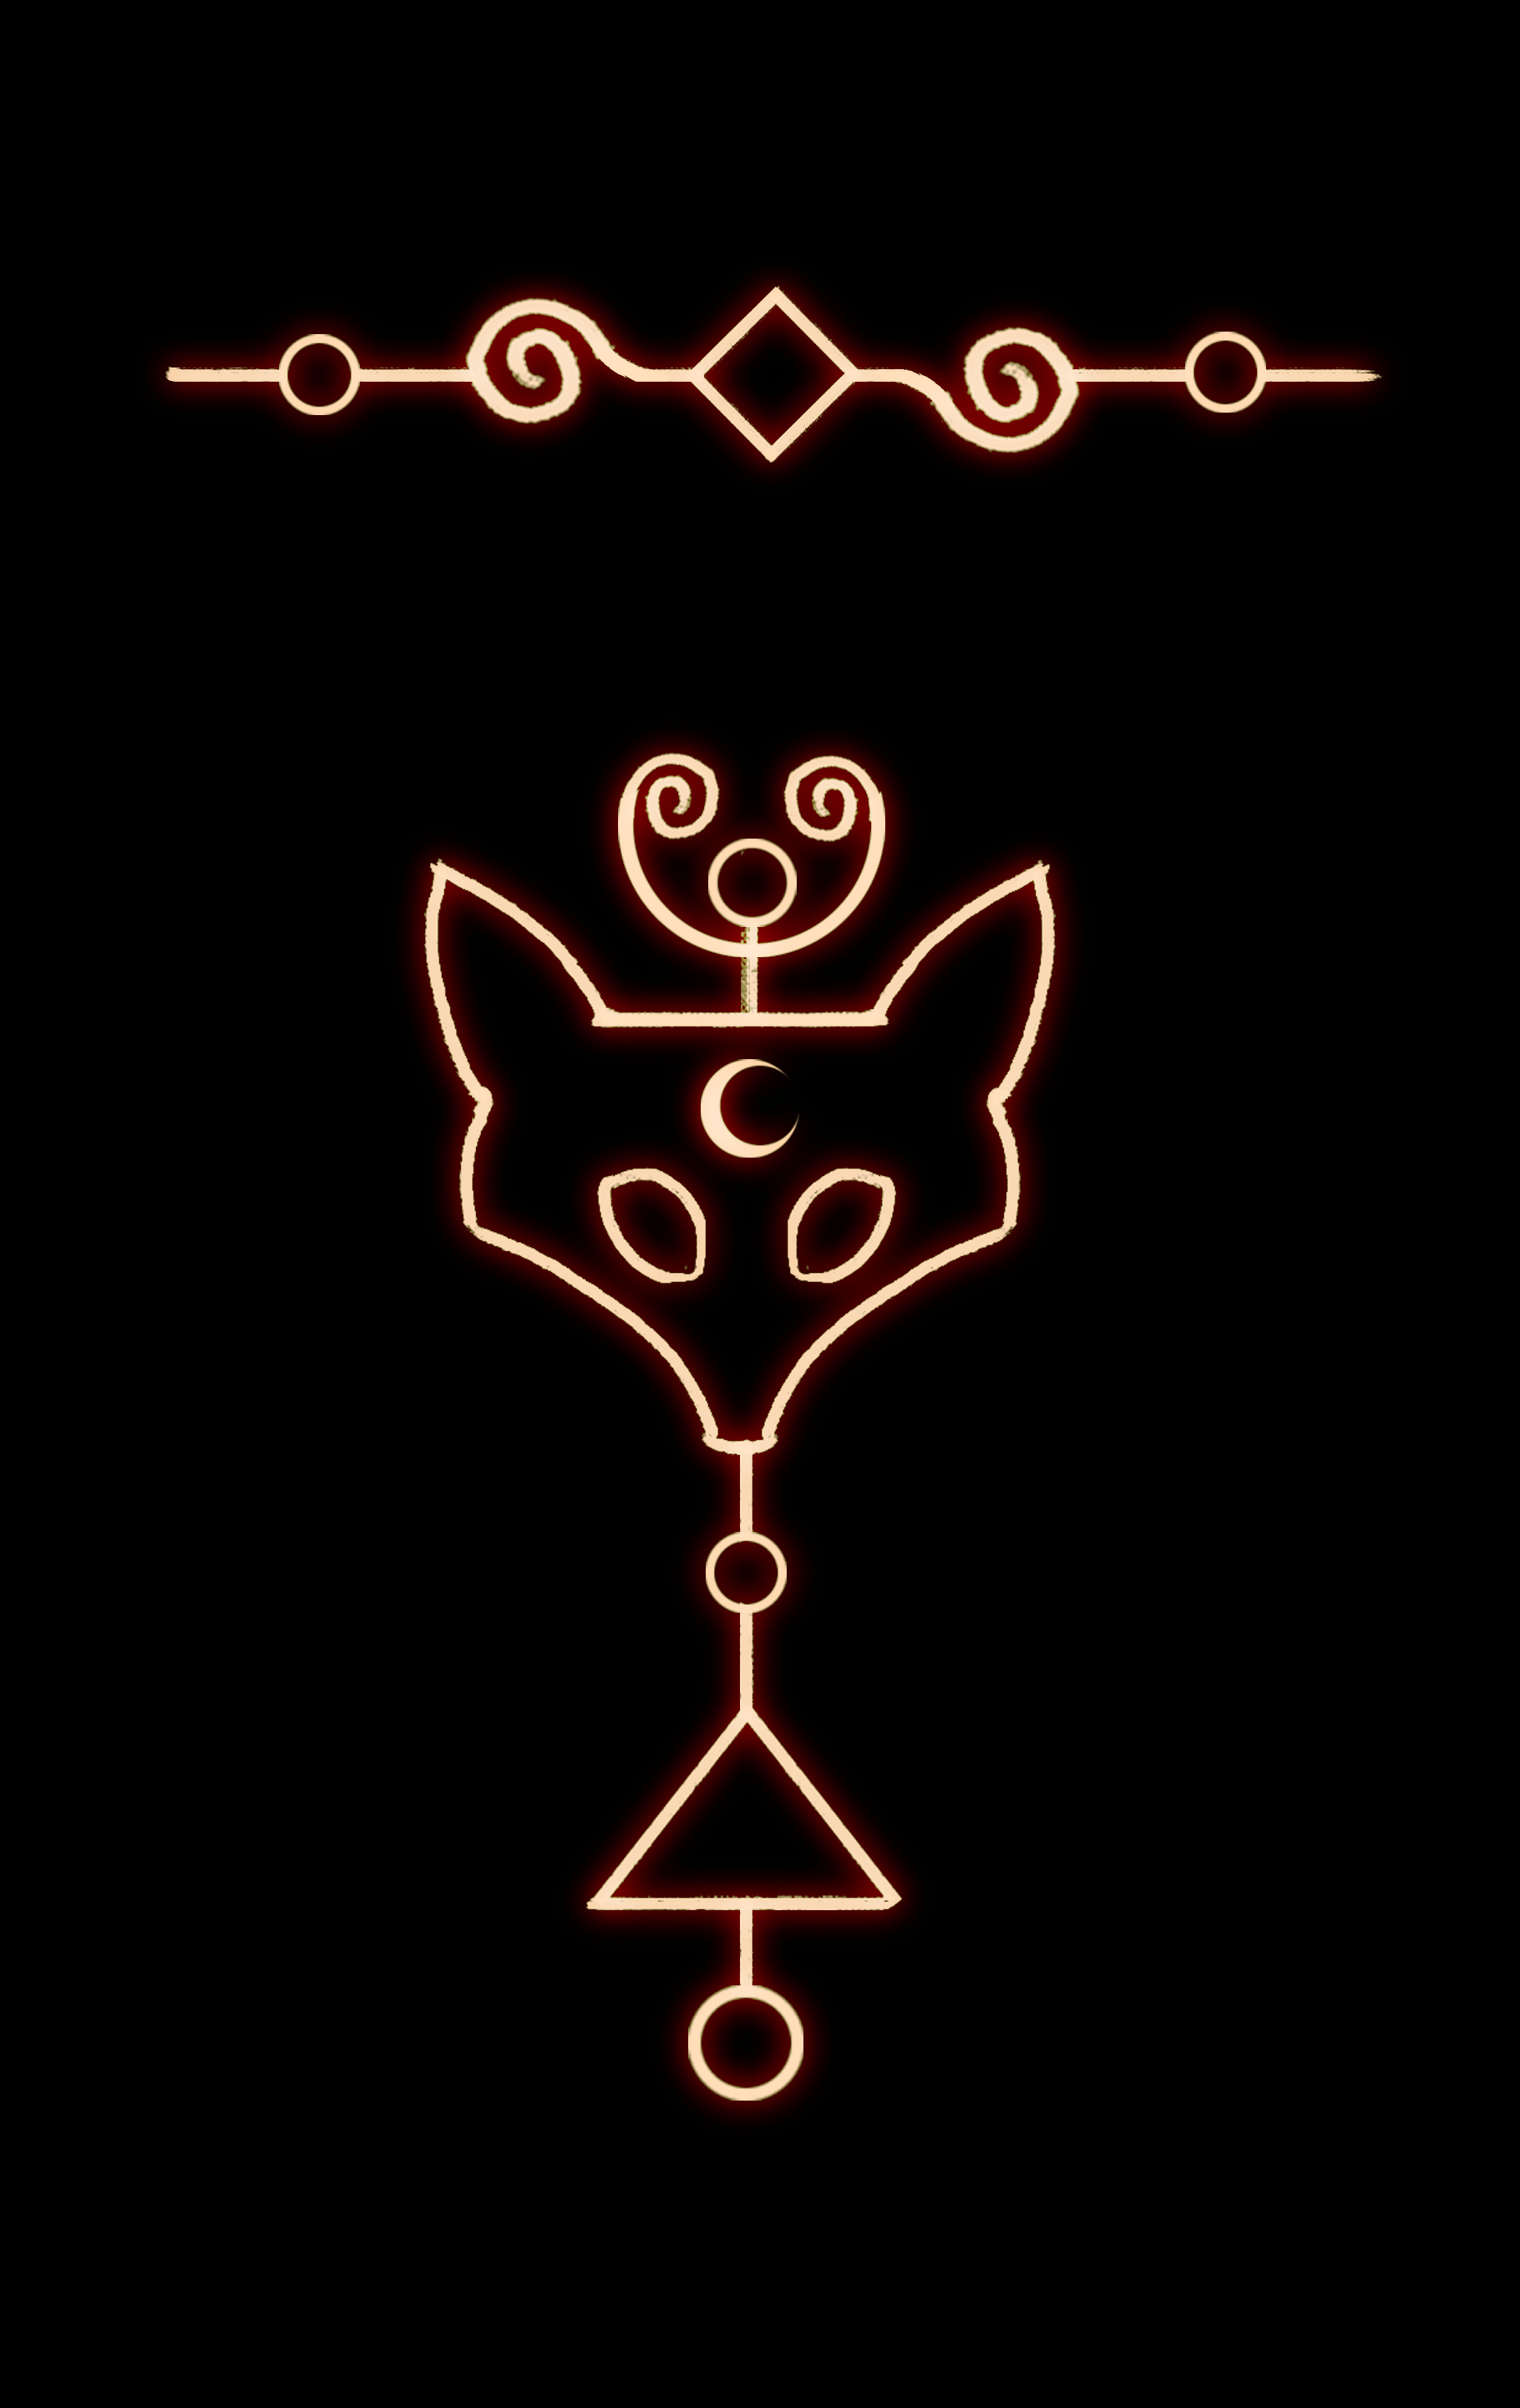 design graphique d'un renard mystique orange